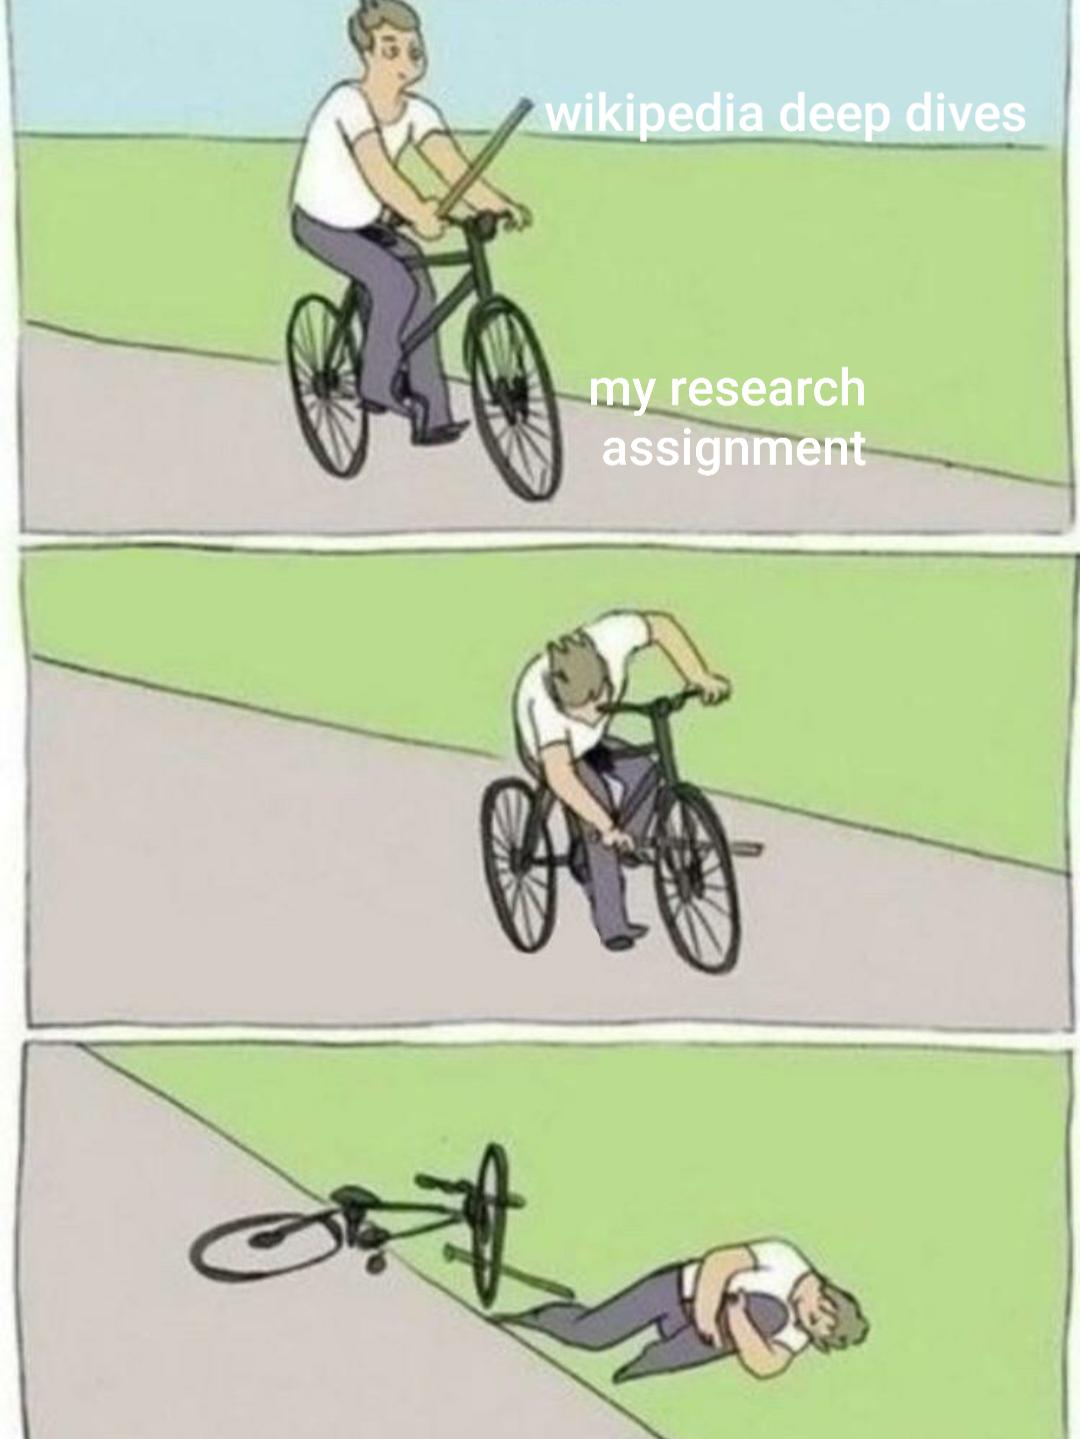 r/collegememes- college dank memes - stick in bike wheel meme - wikipedia deep dives my research assignment